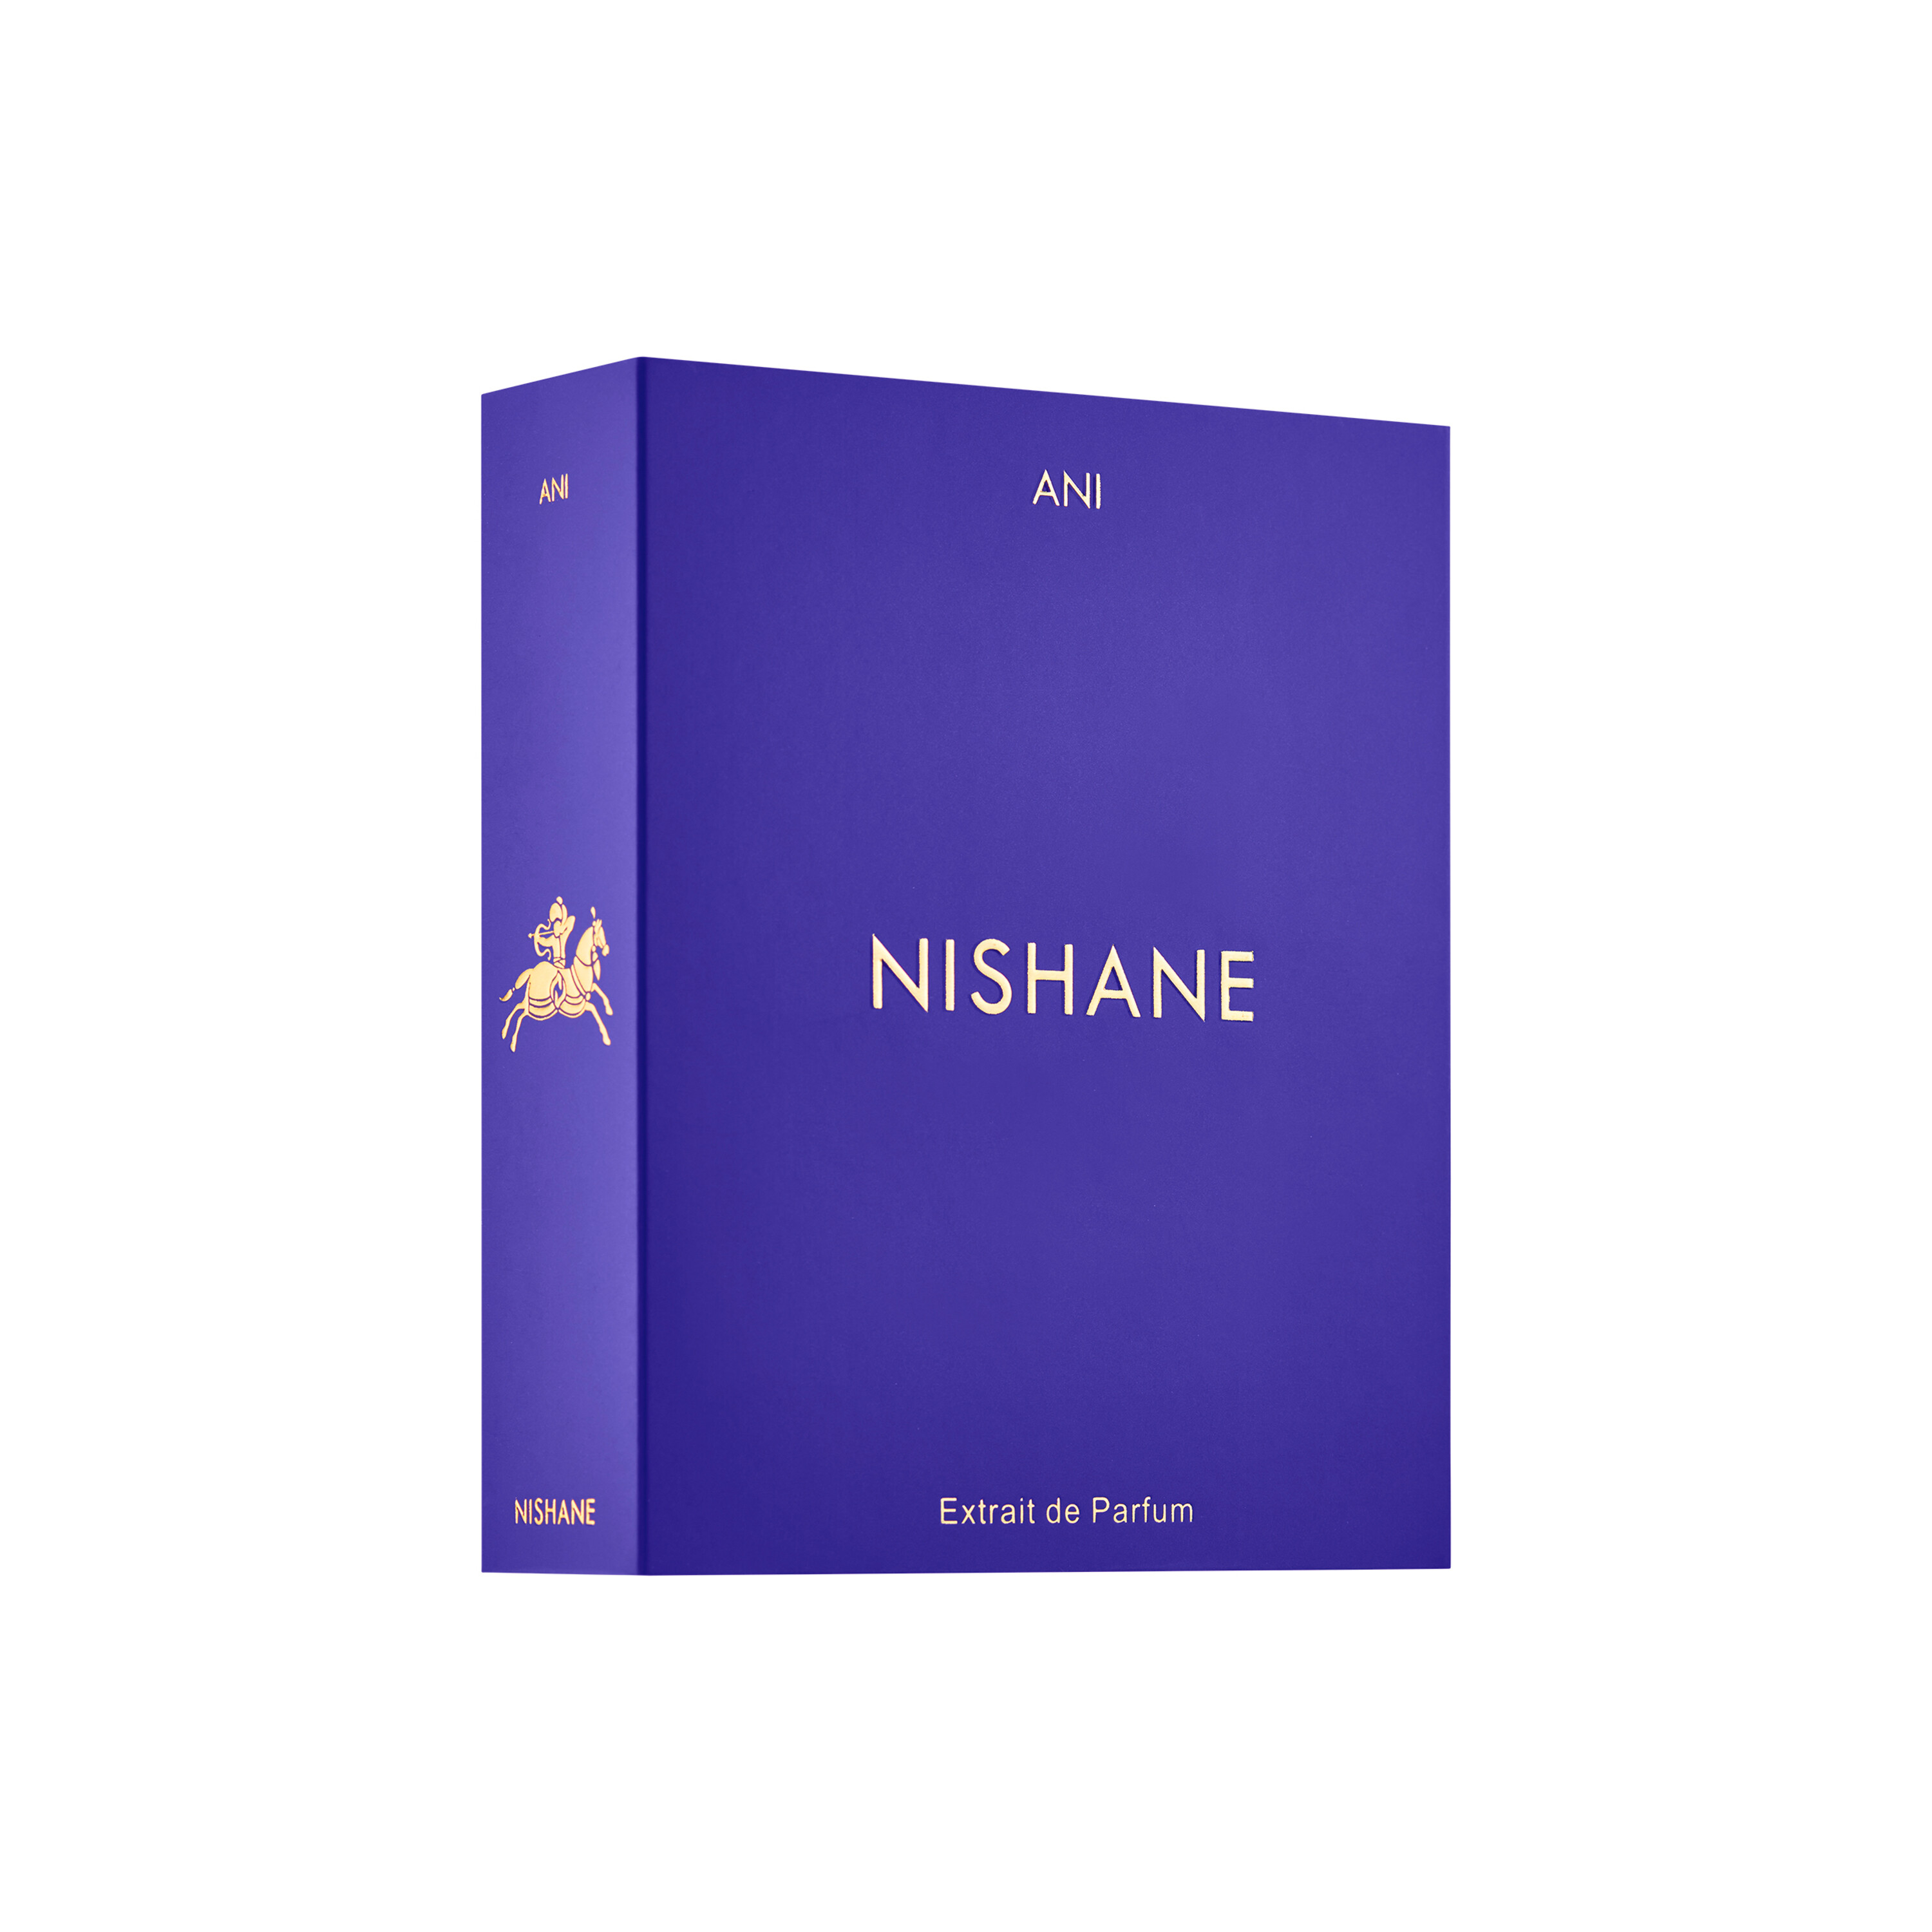 NISHANE ANI Extrait de Parfum 50ml